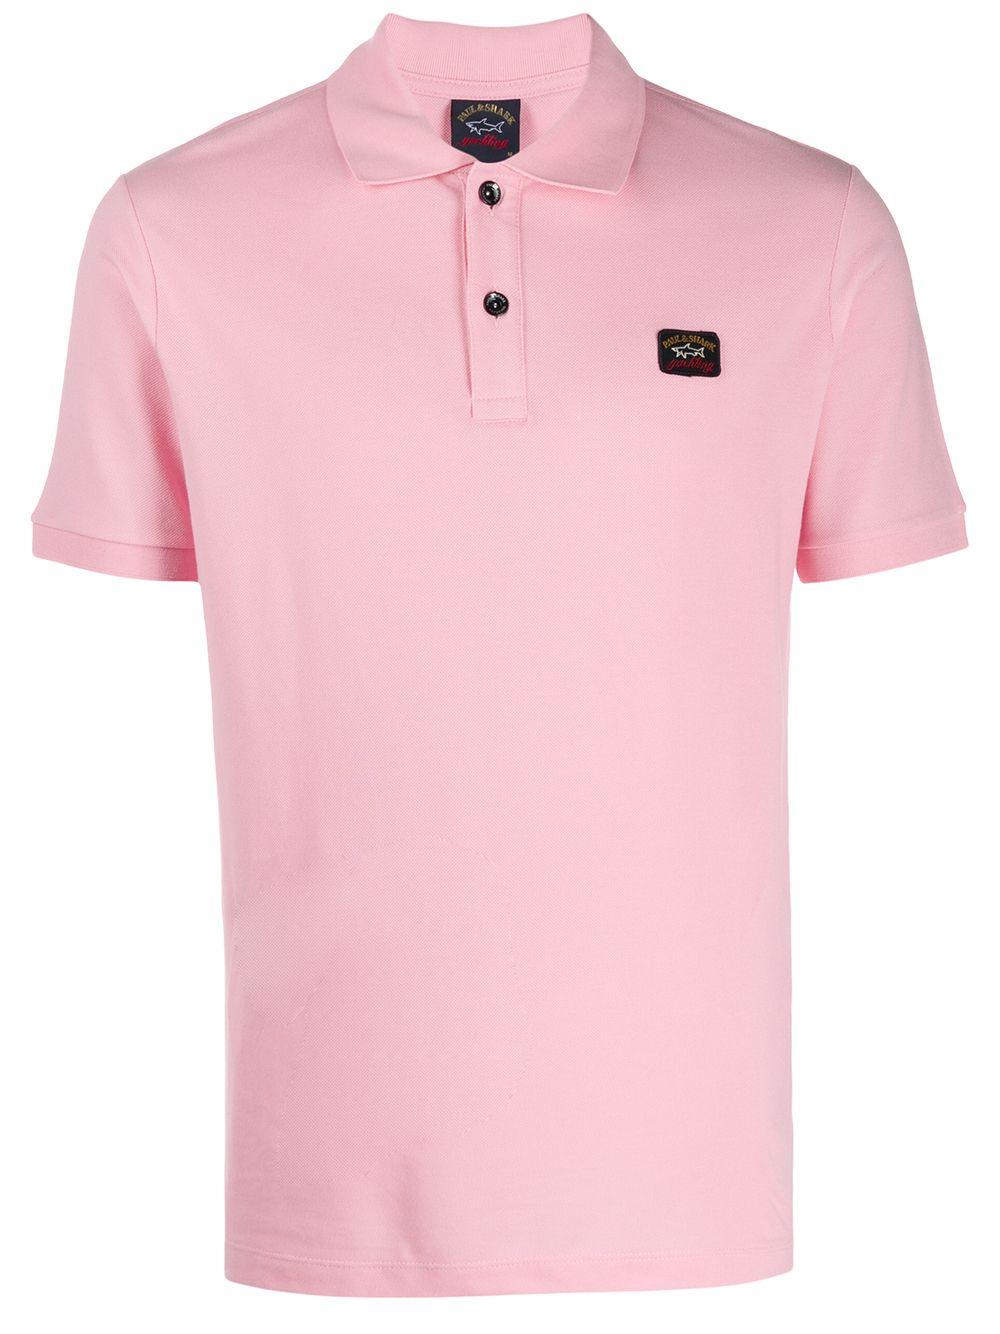 Paul & Shark Cotton Logo Polo Shirt in Pink for Men - Lyst